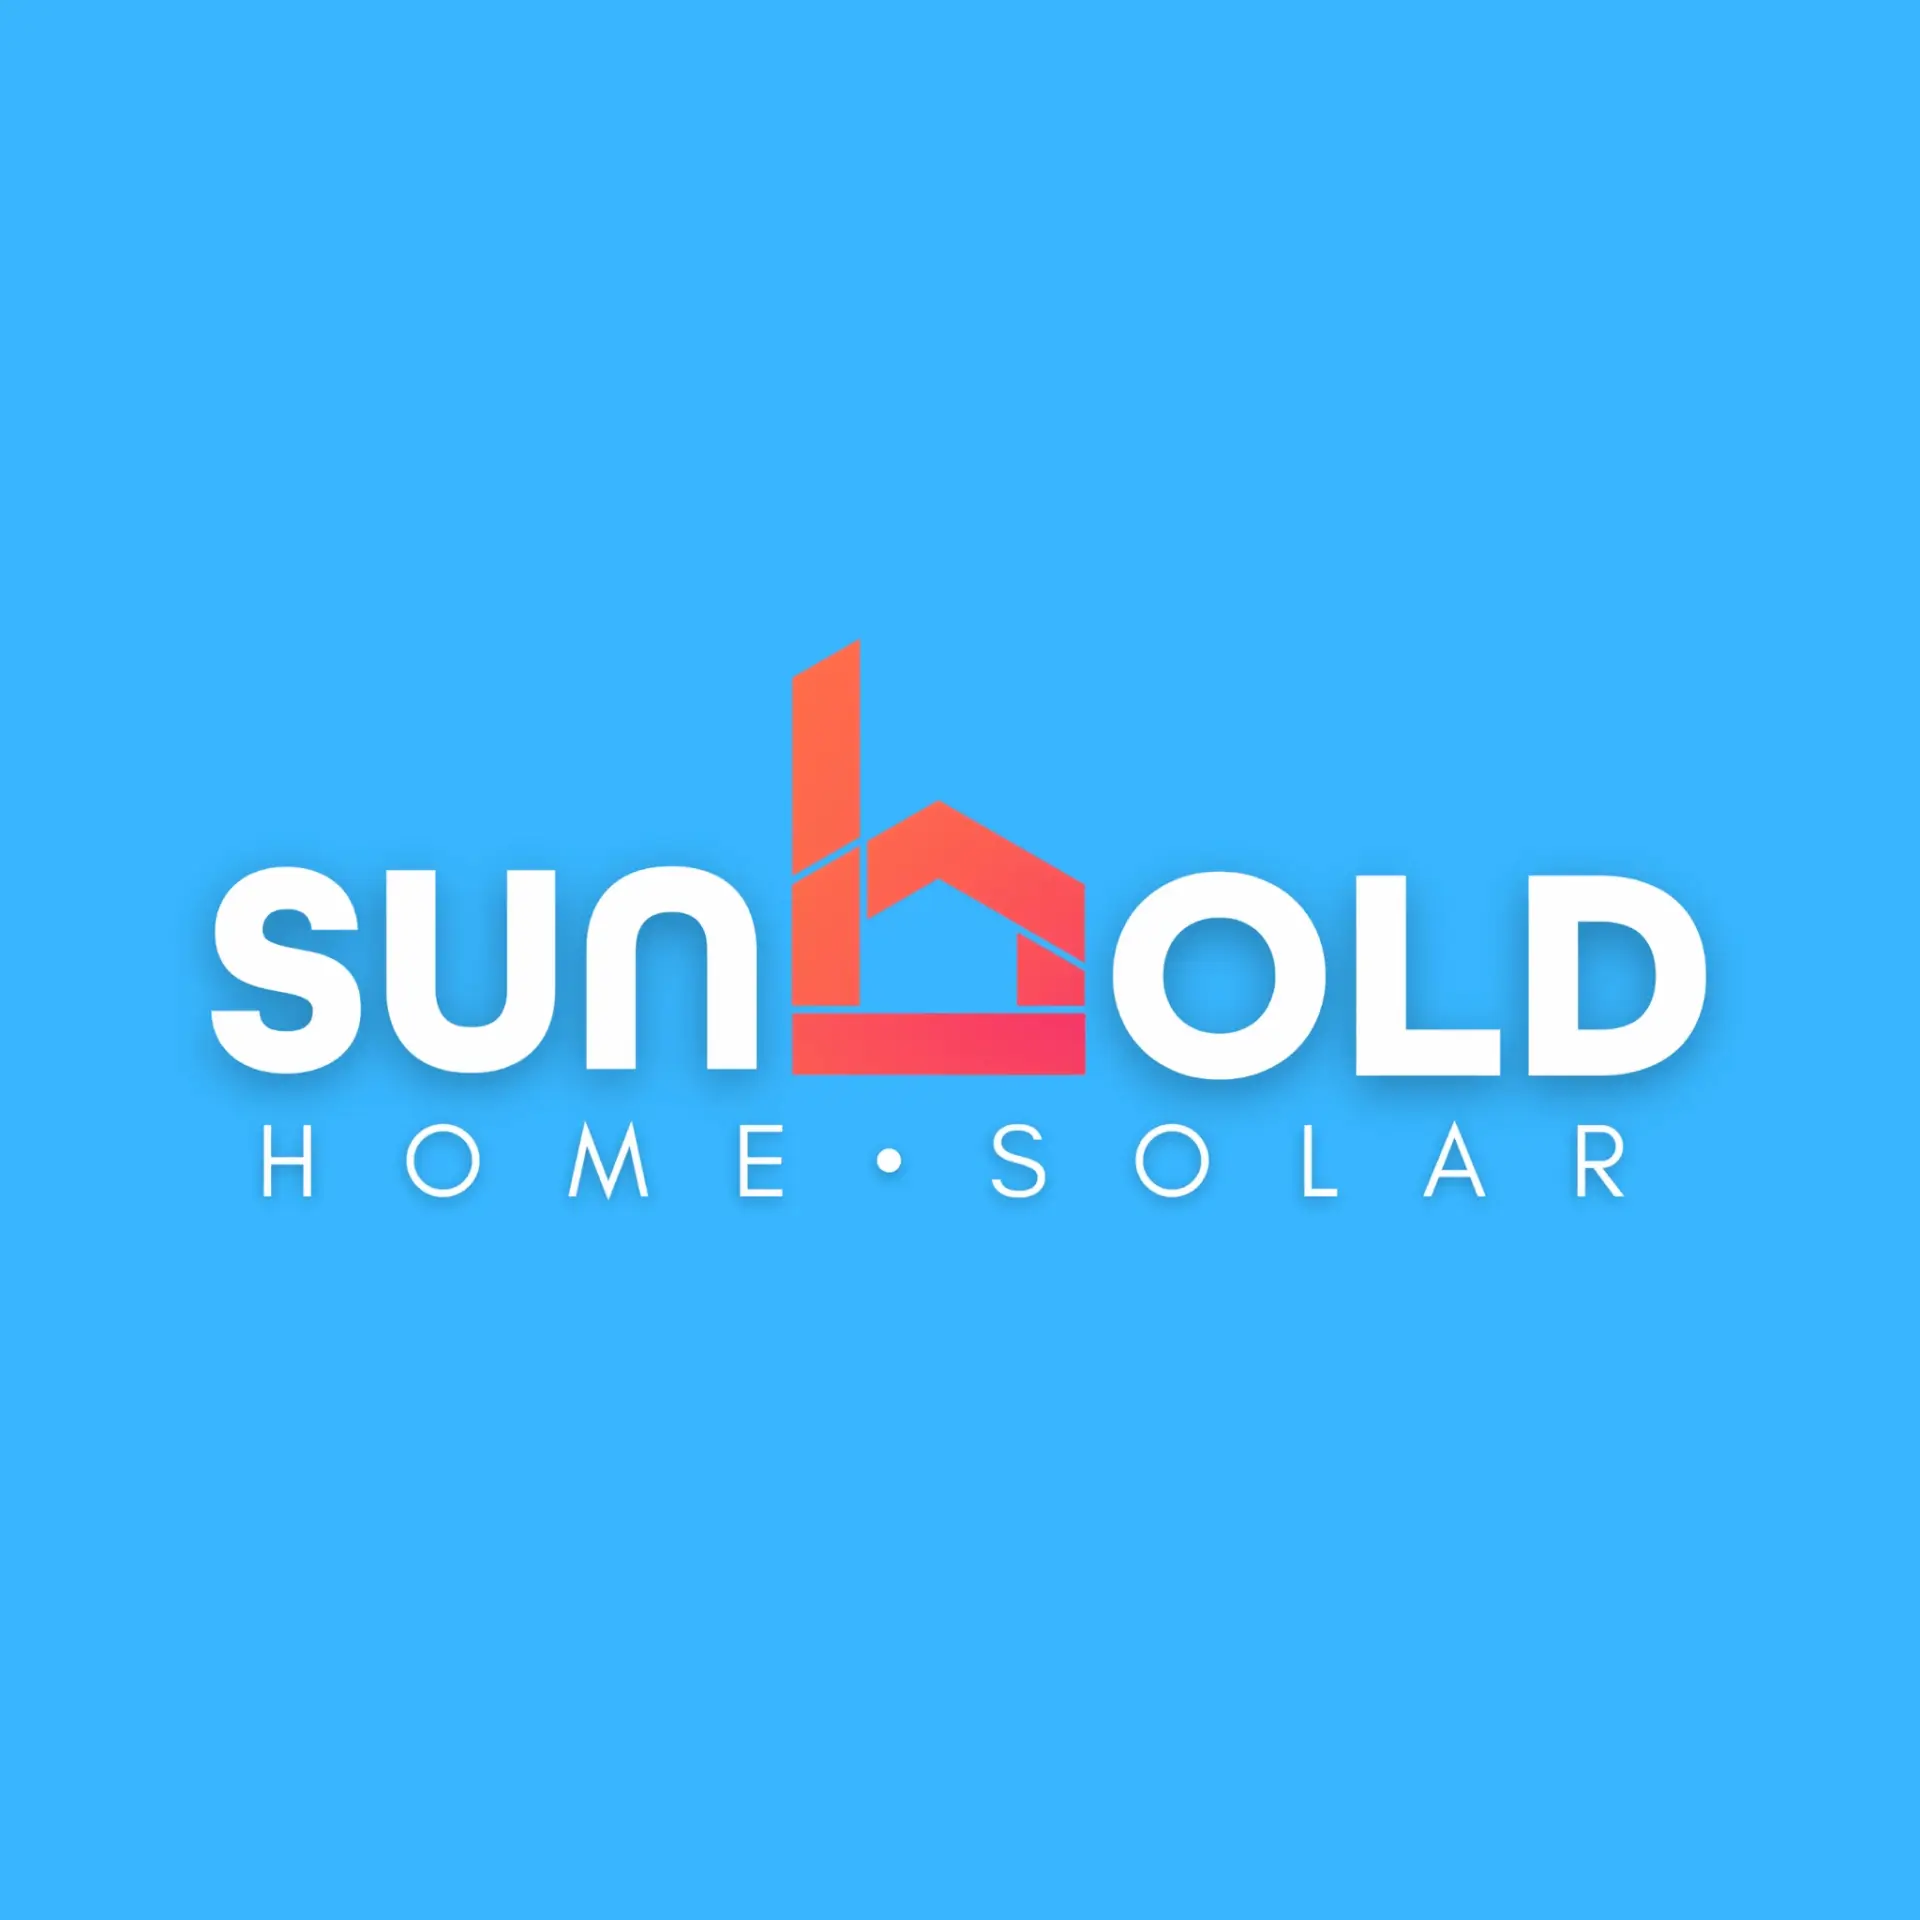 Sunbold Solar